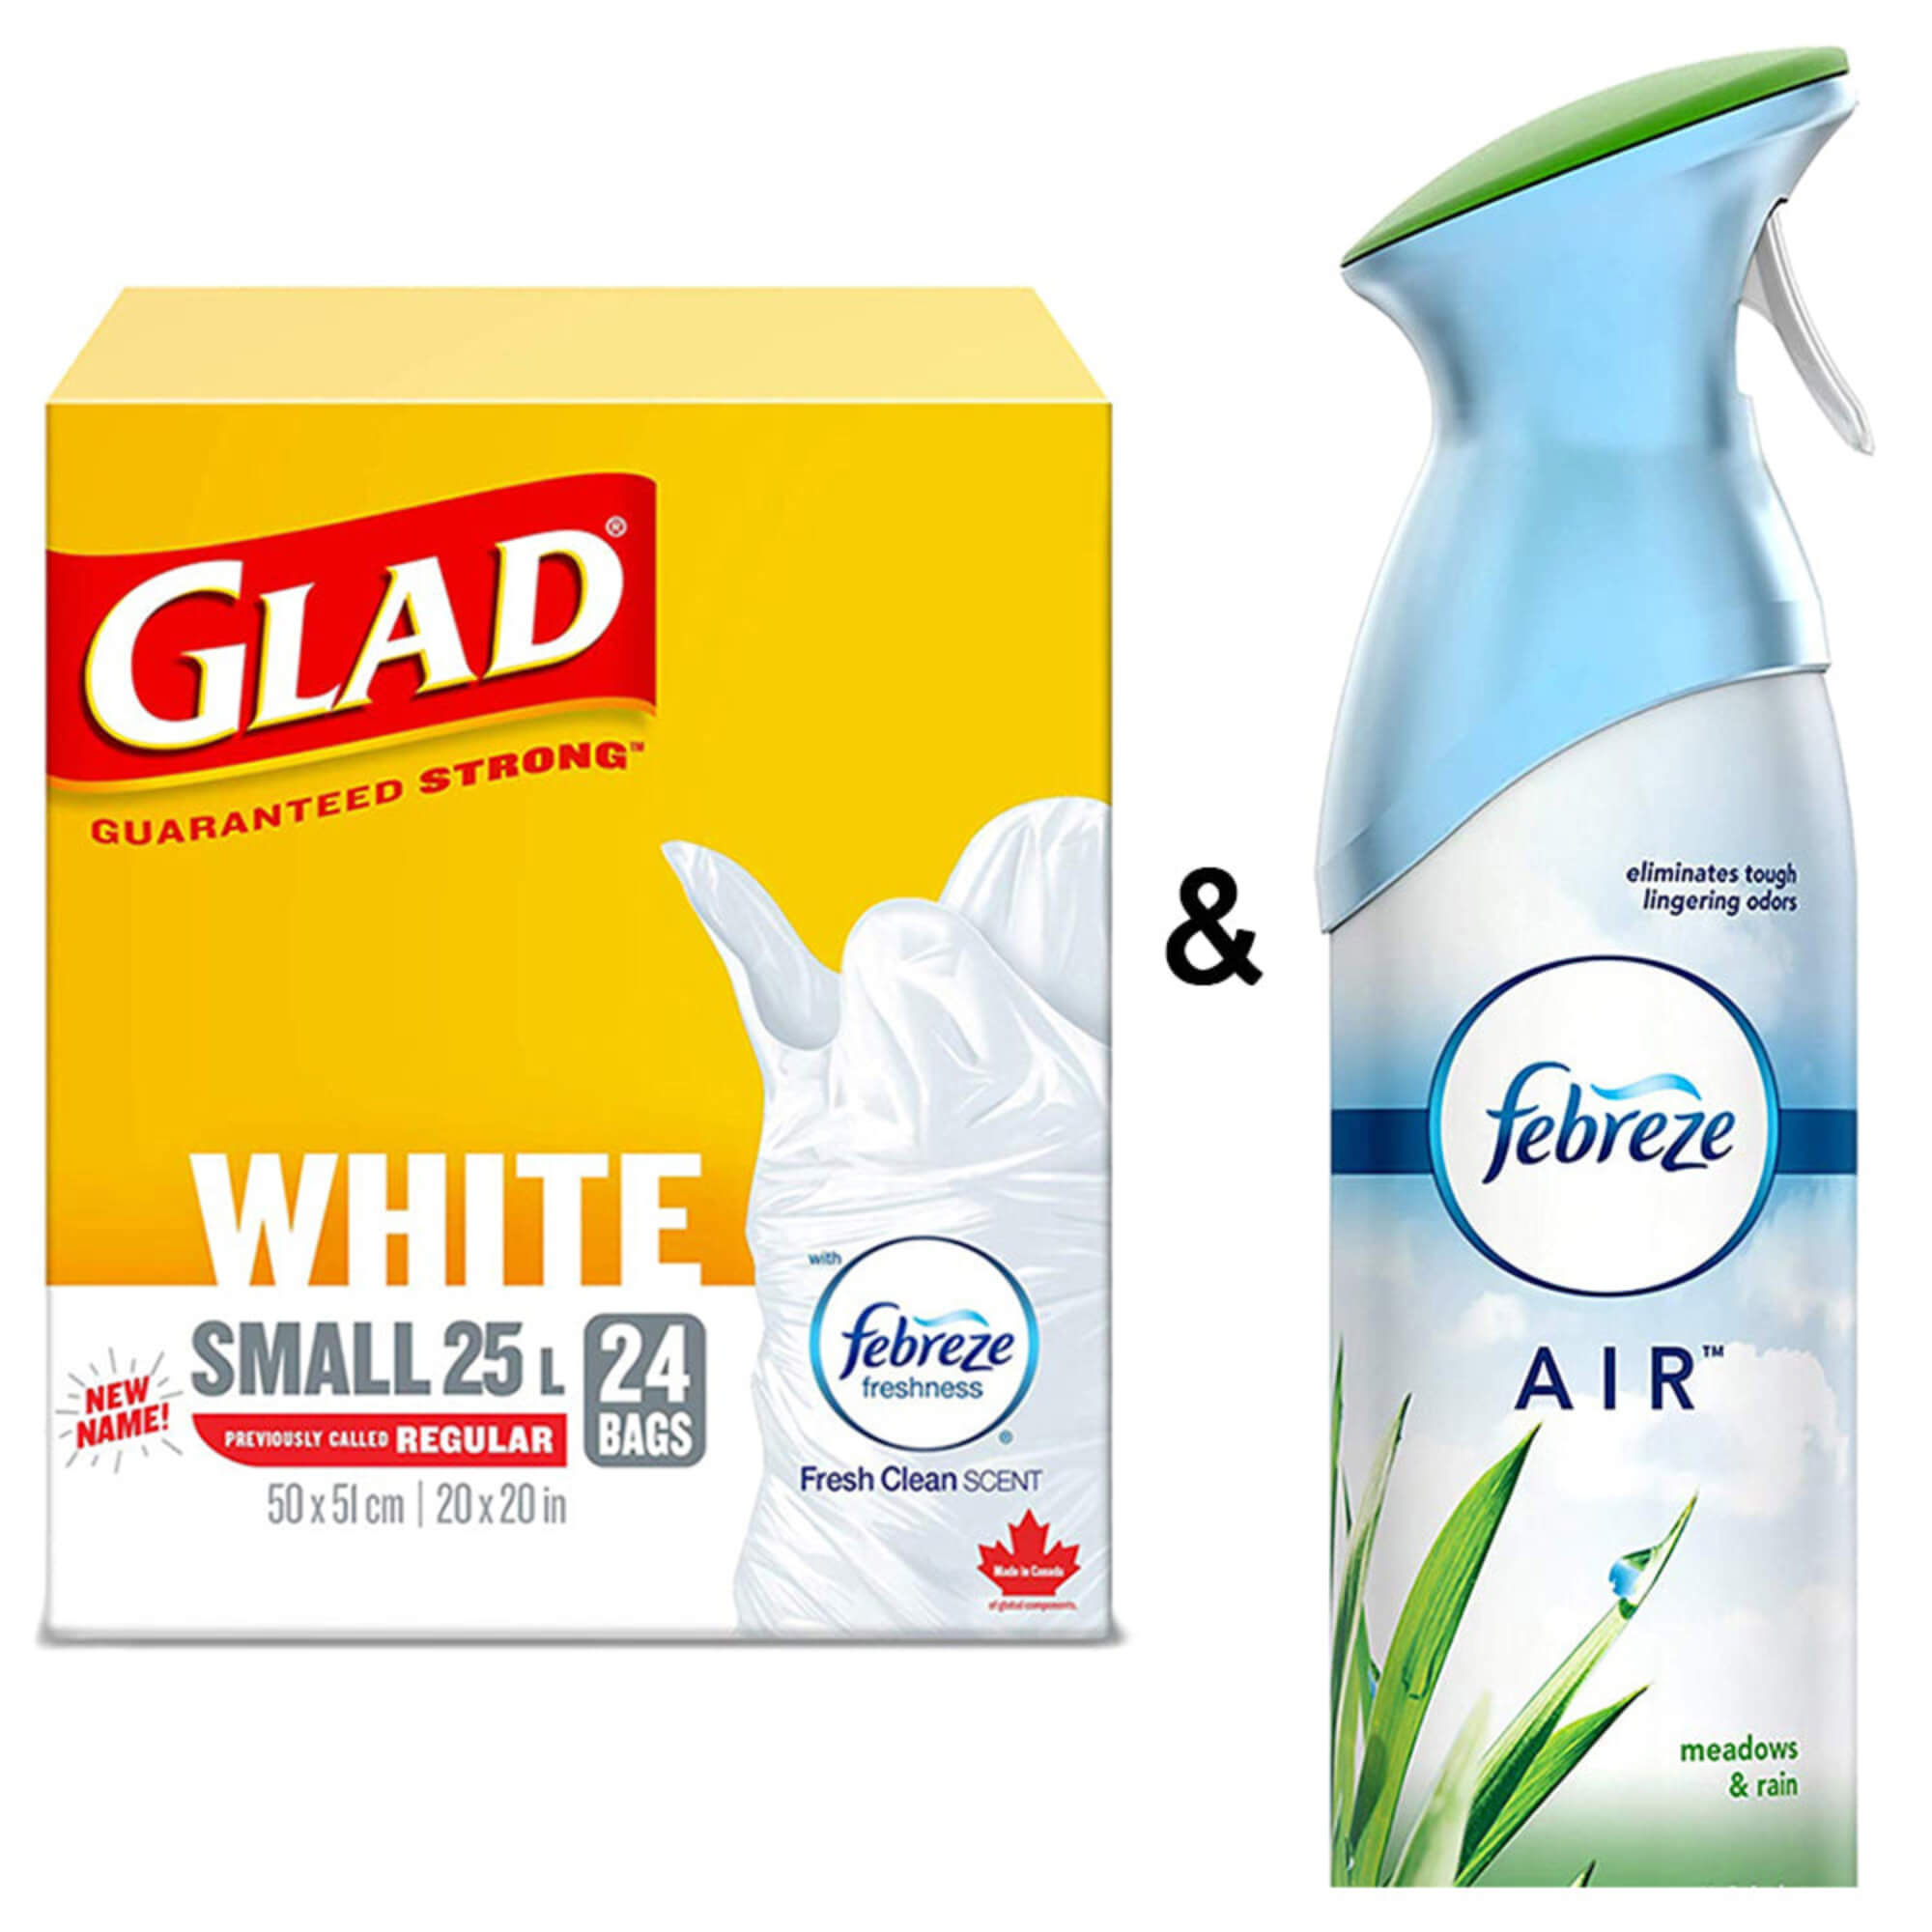 Glad White Garbage Bags, Small & Febreze Air Freshener, 250g